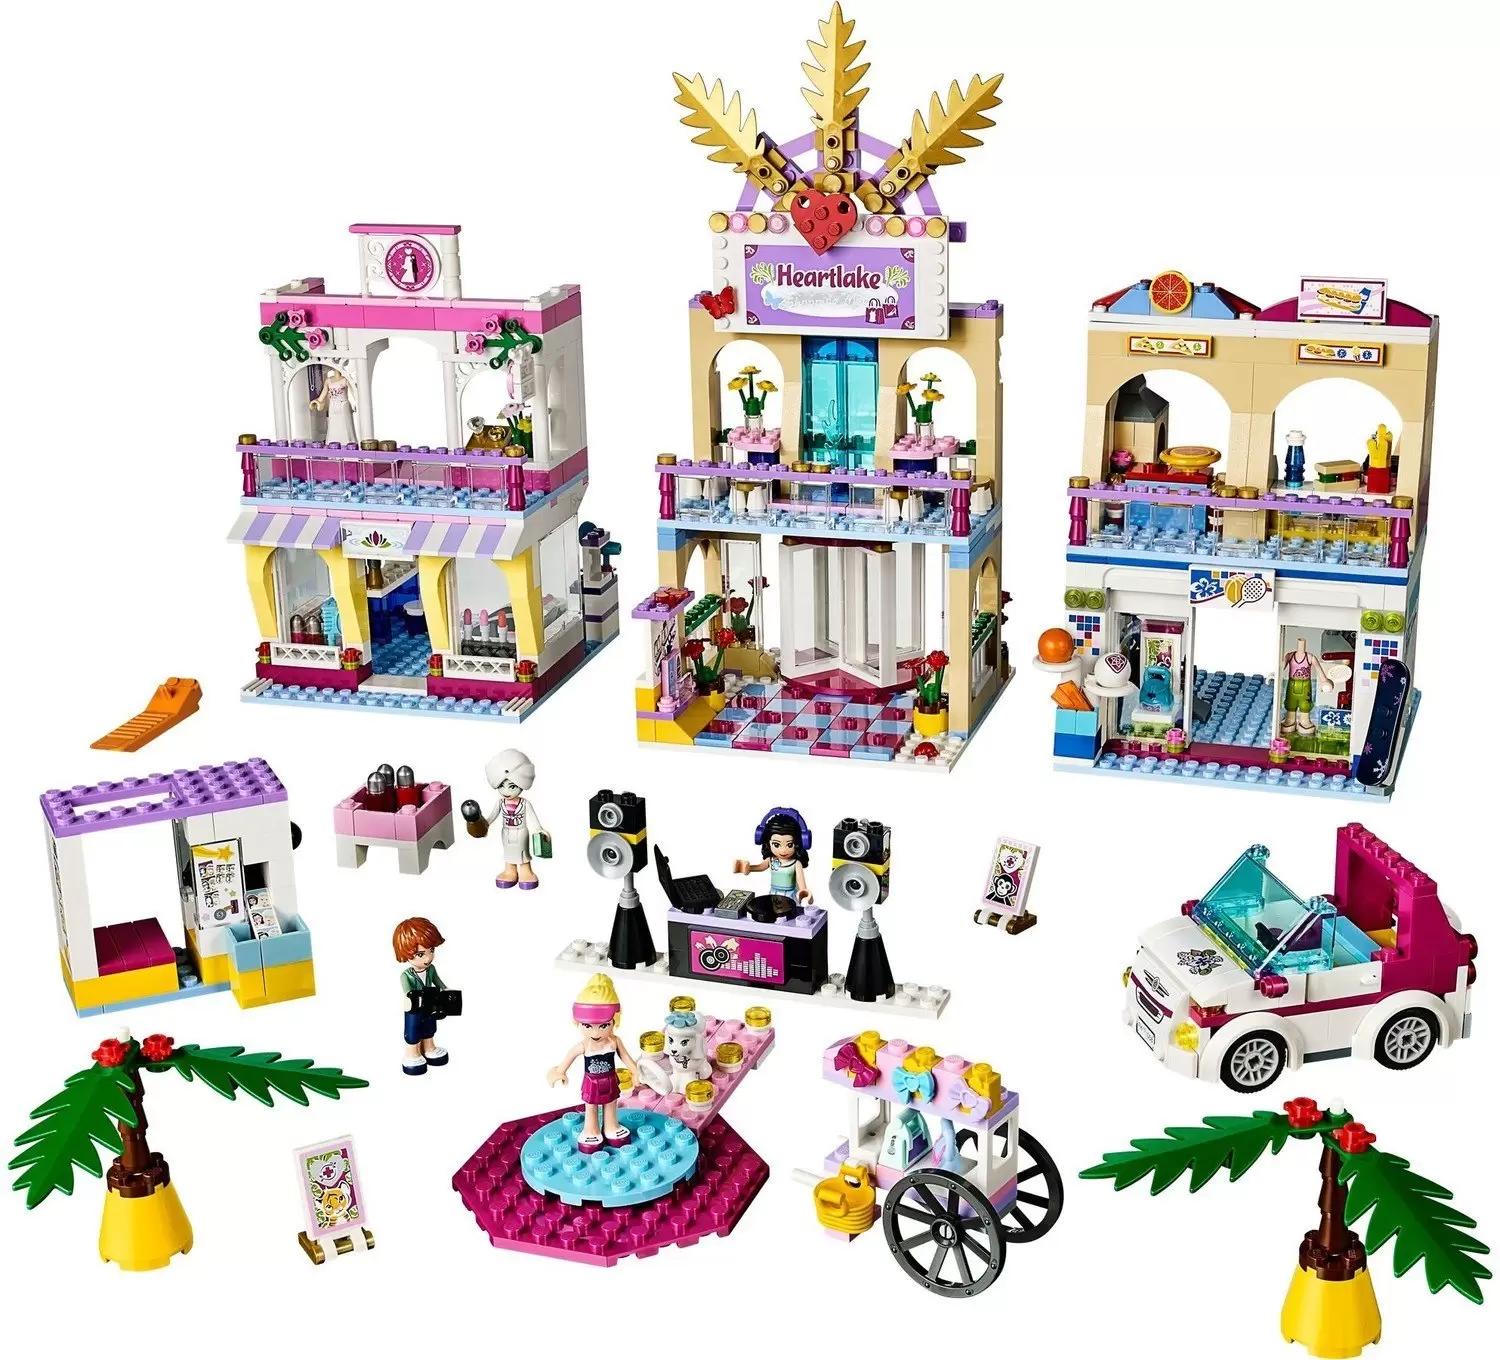 LEGO Friends - Heartlake Shopping Mall